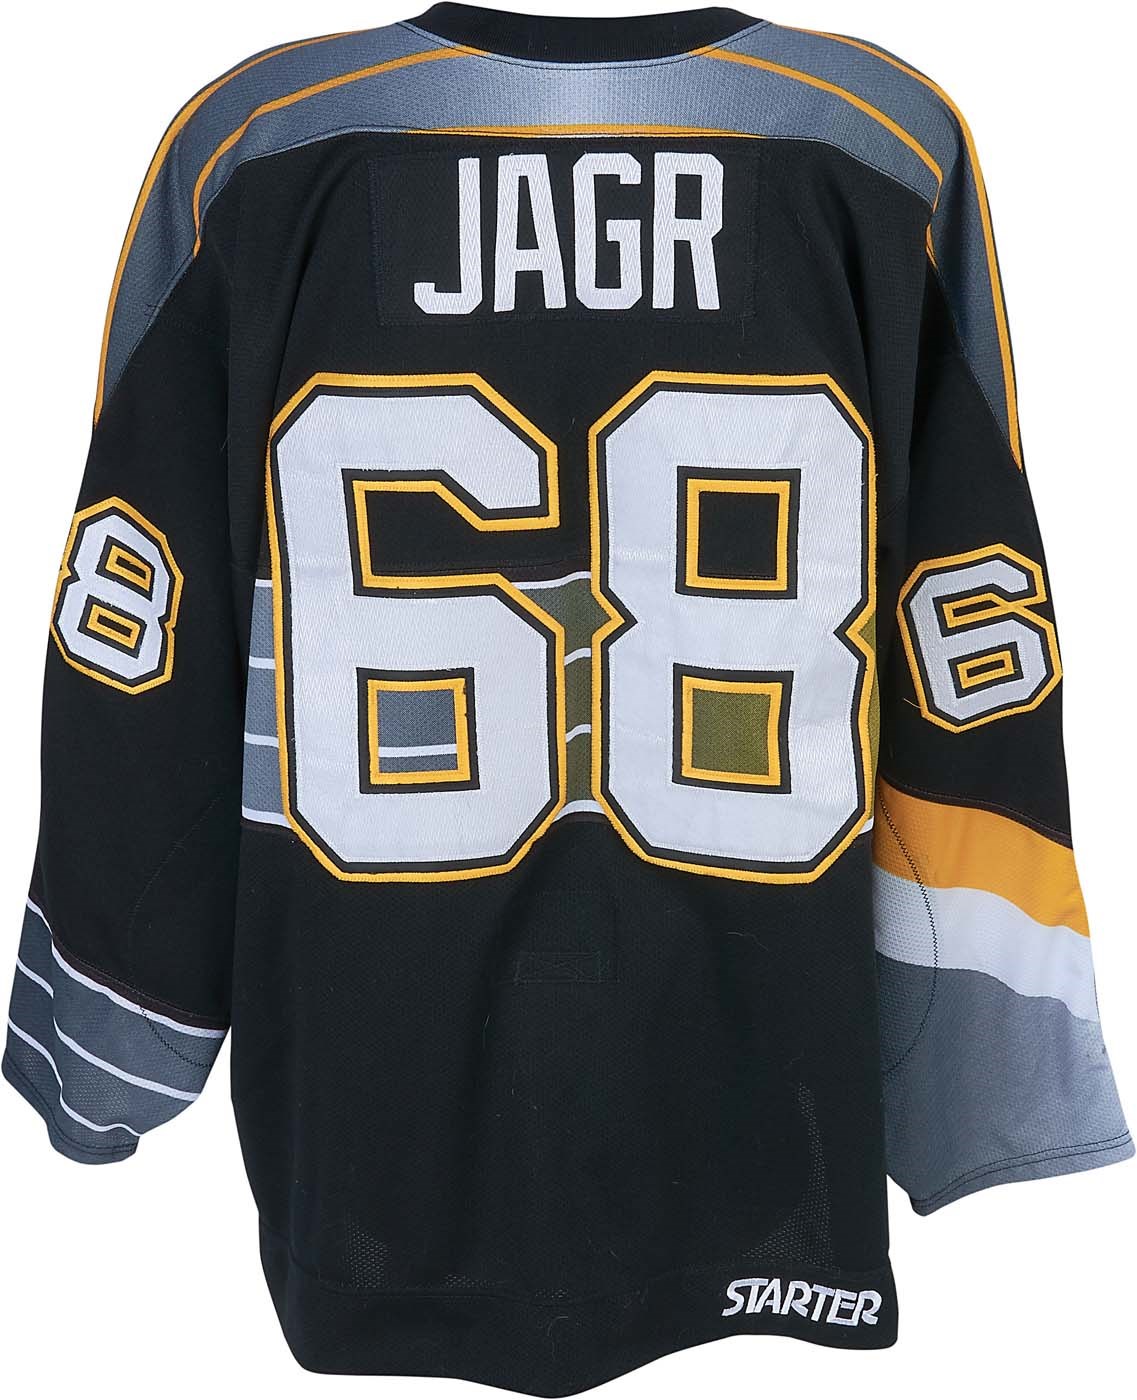 Hockey - 1997-98 Jaromir Jagr Pittsburgh Penguins Game Worn Jersey